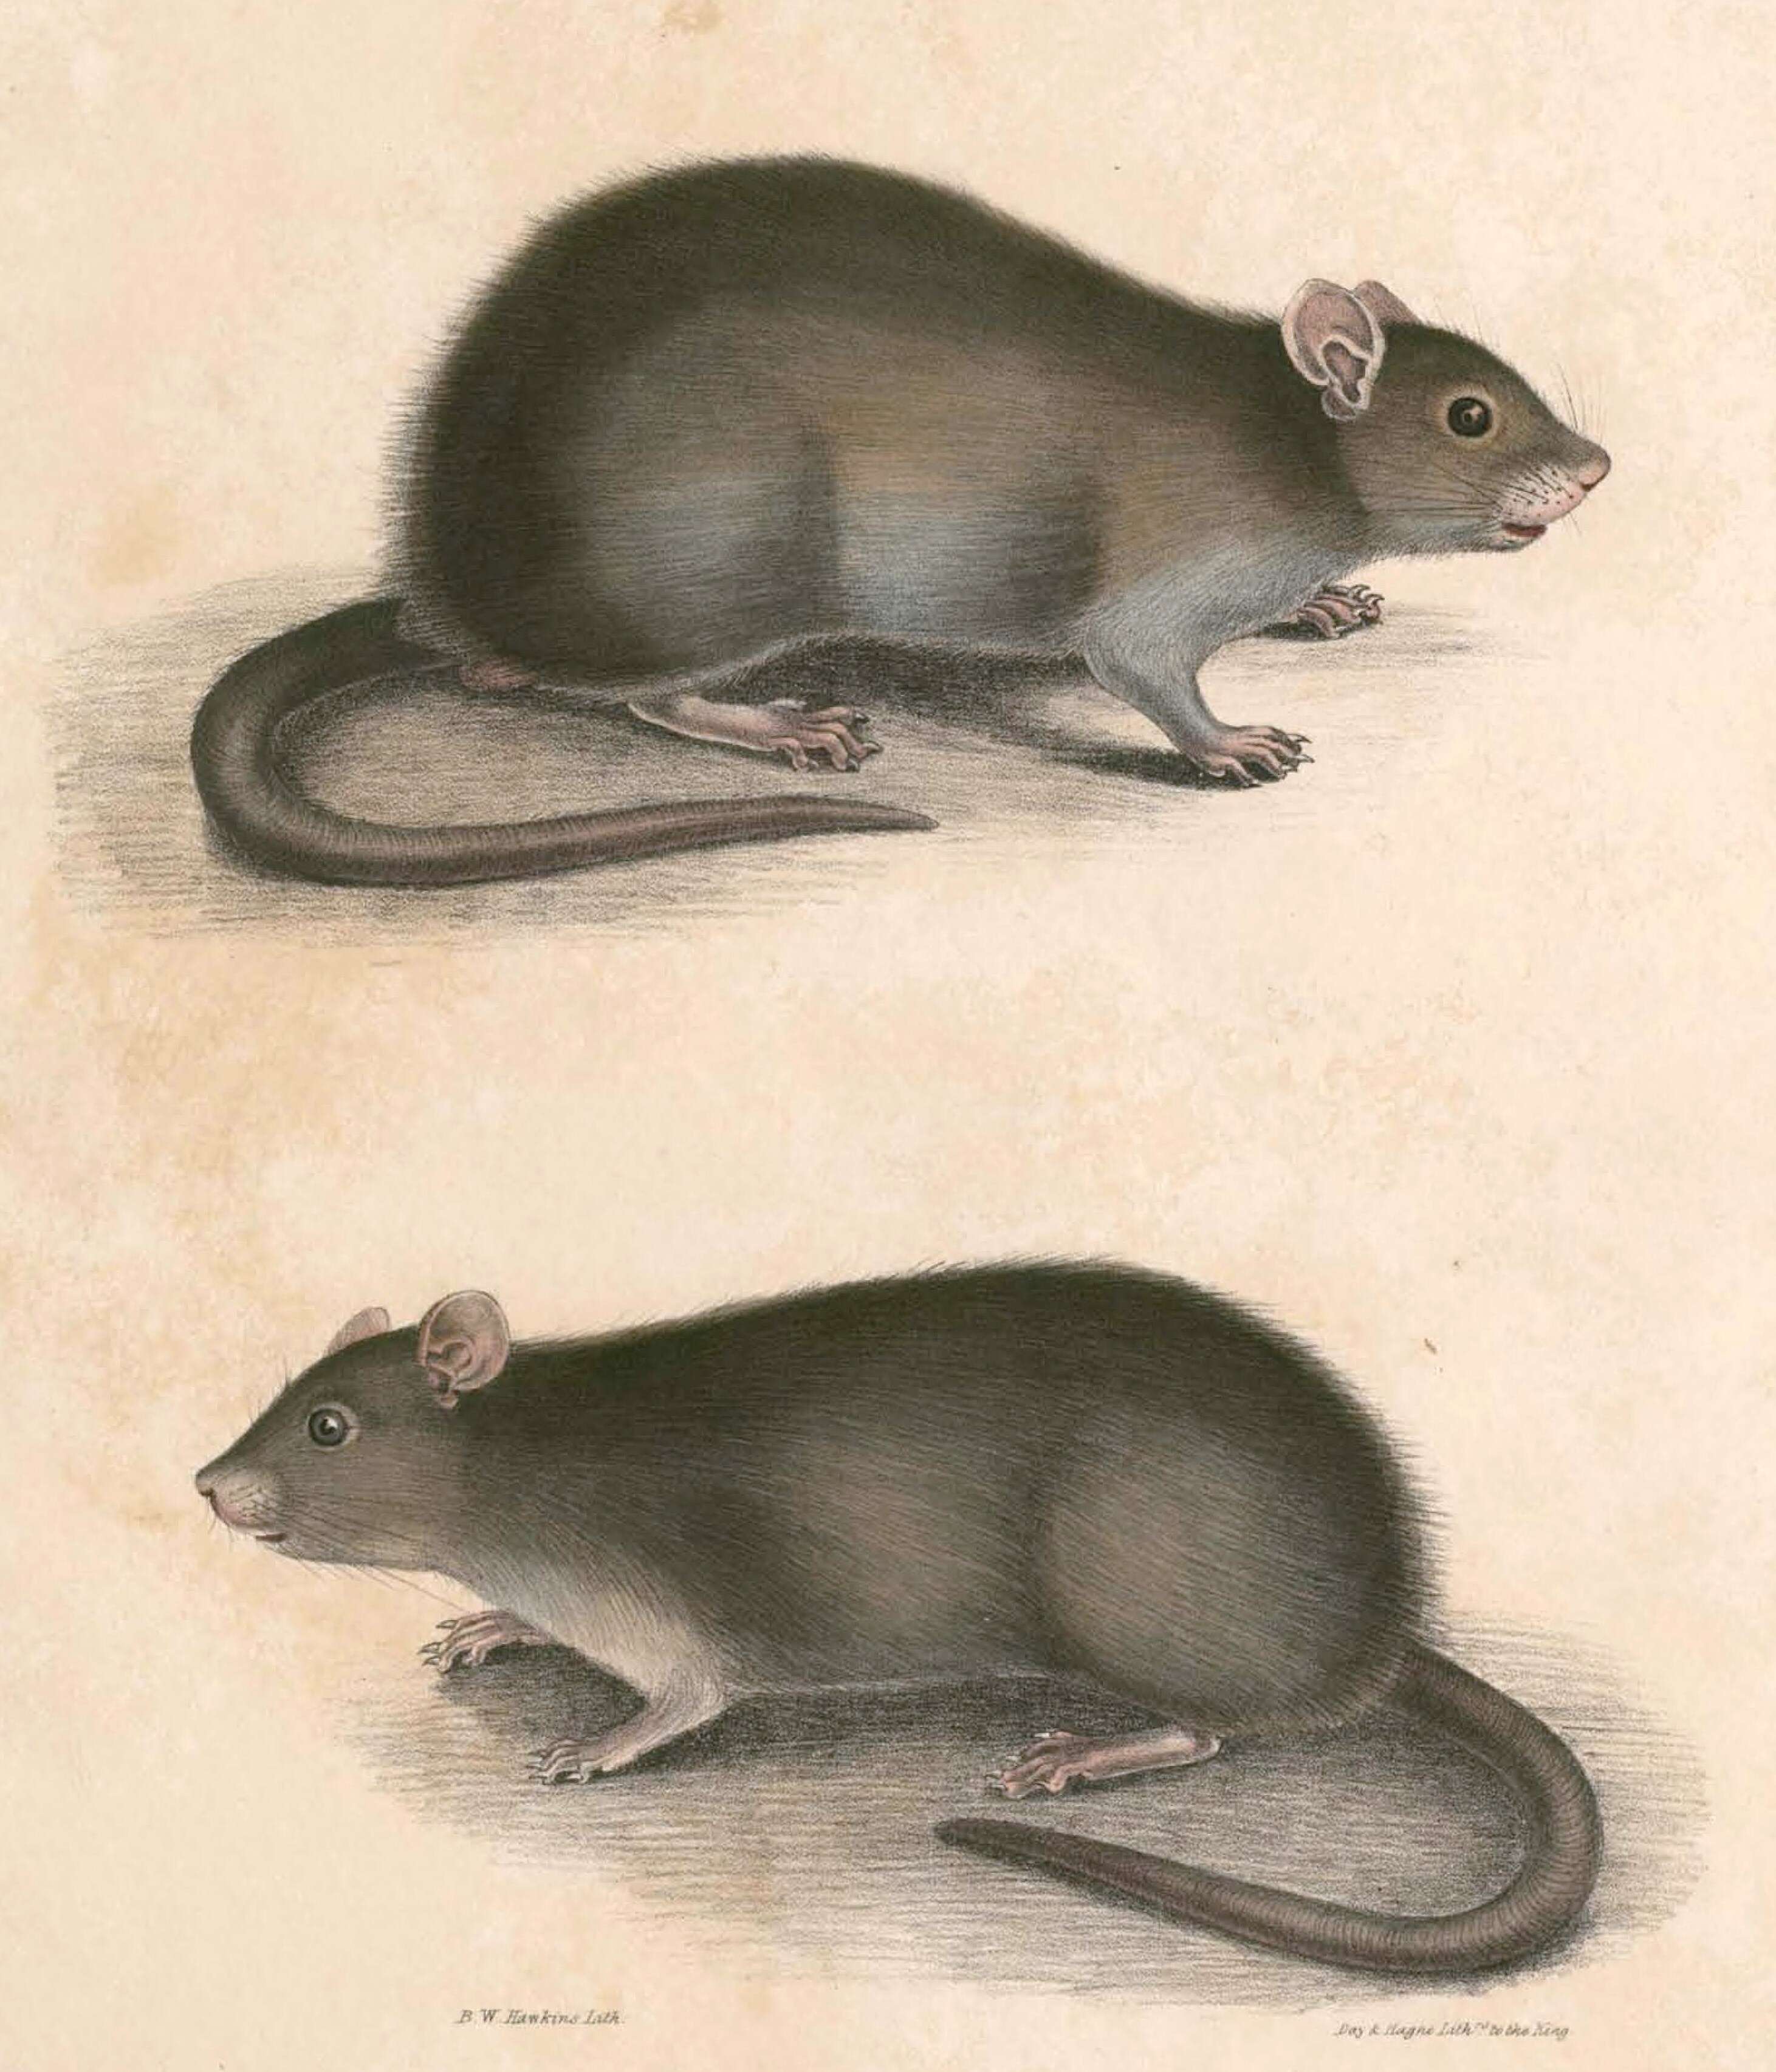 Image of Indian Mole-rat